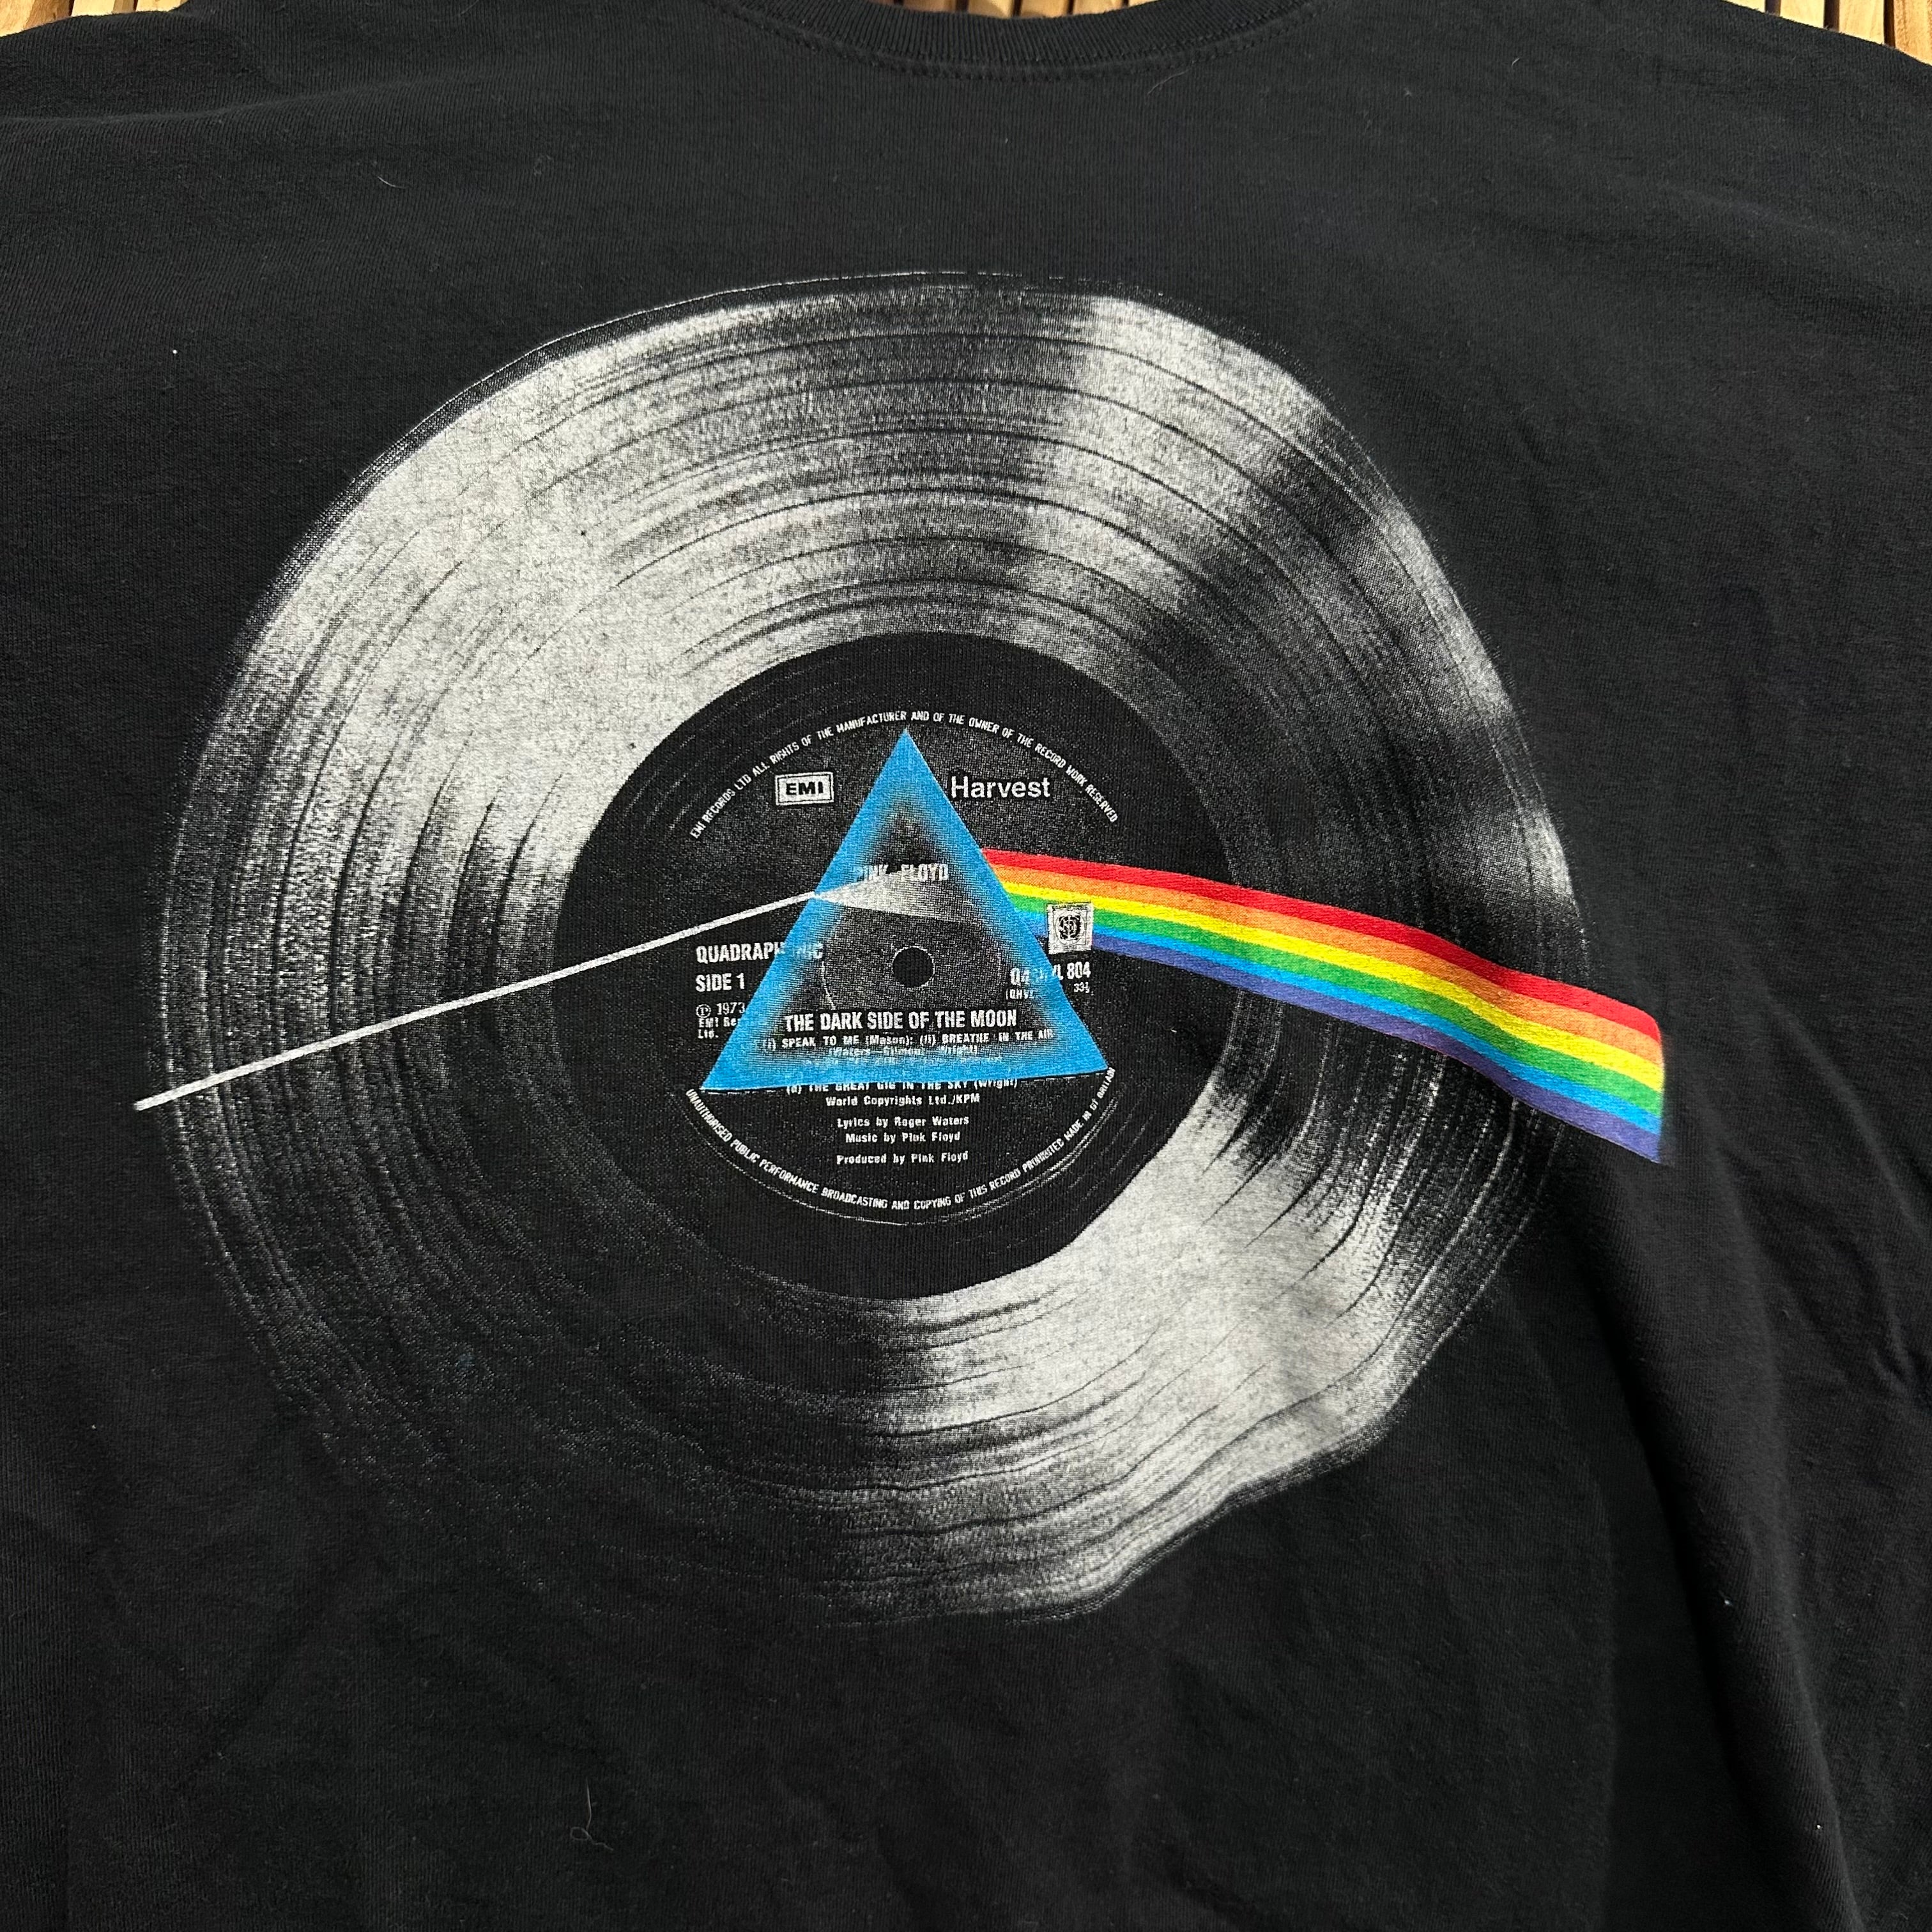 Modern Pink Floyd Record T-Shirt